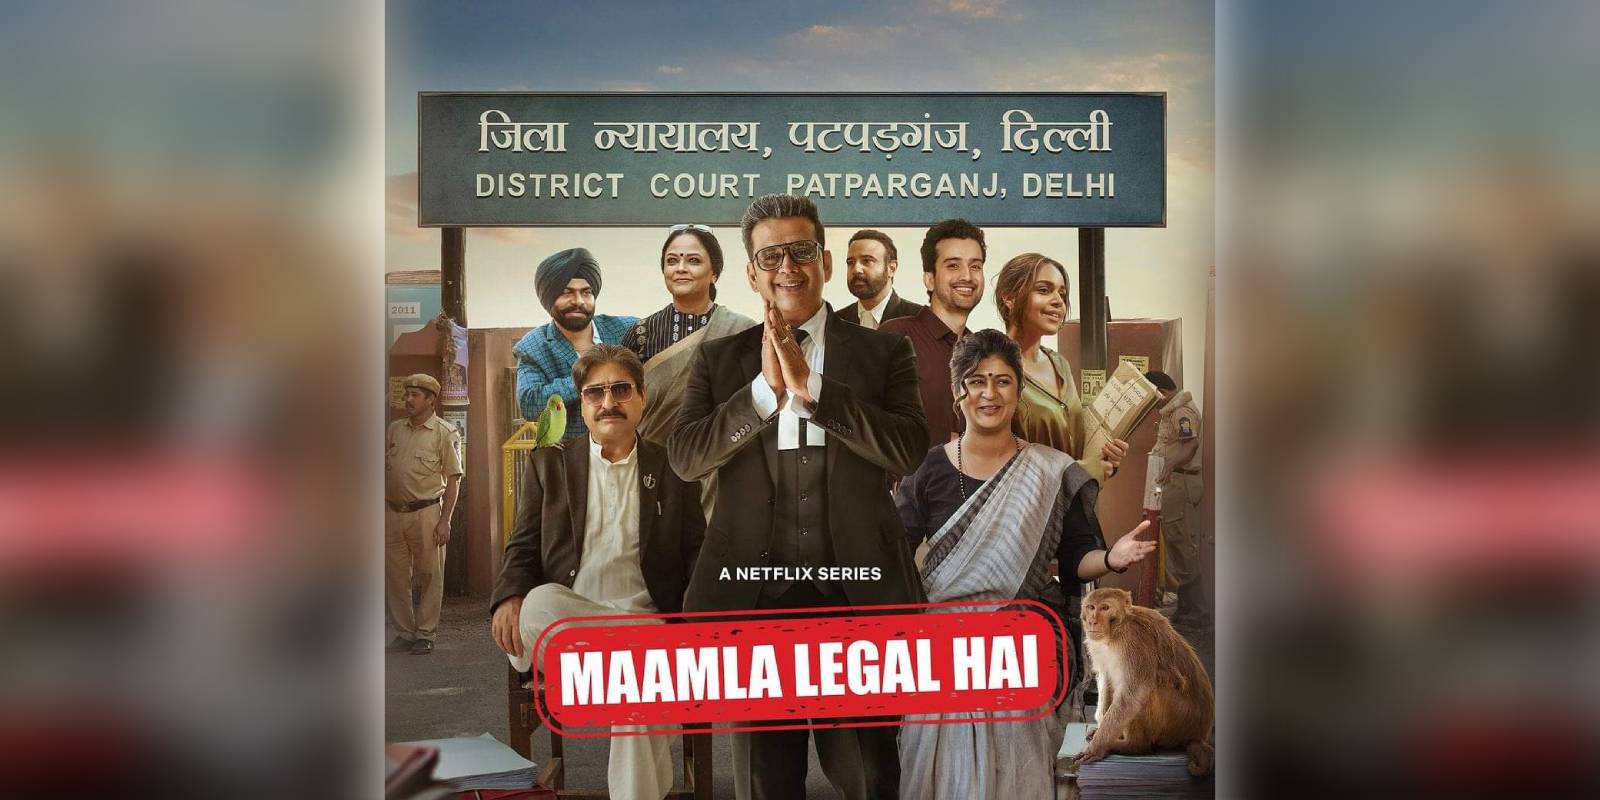 Ravi Kishan’s Maamla Legal Hai is engaging satire